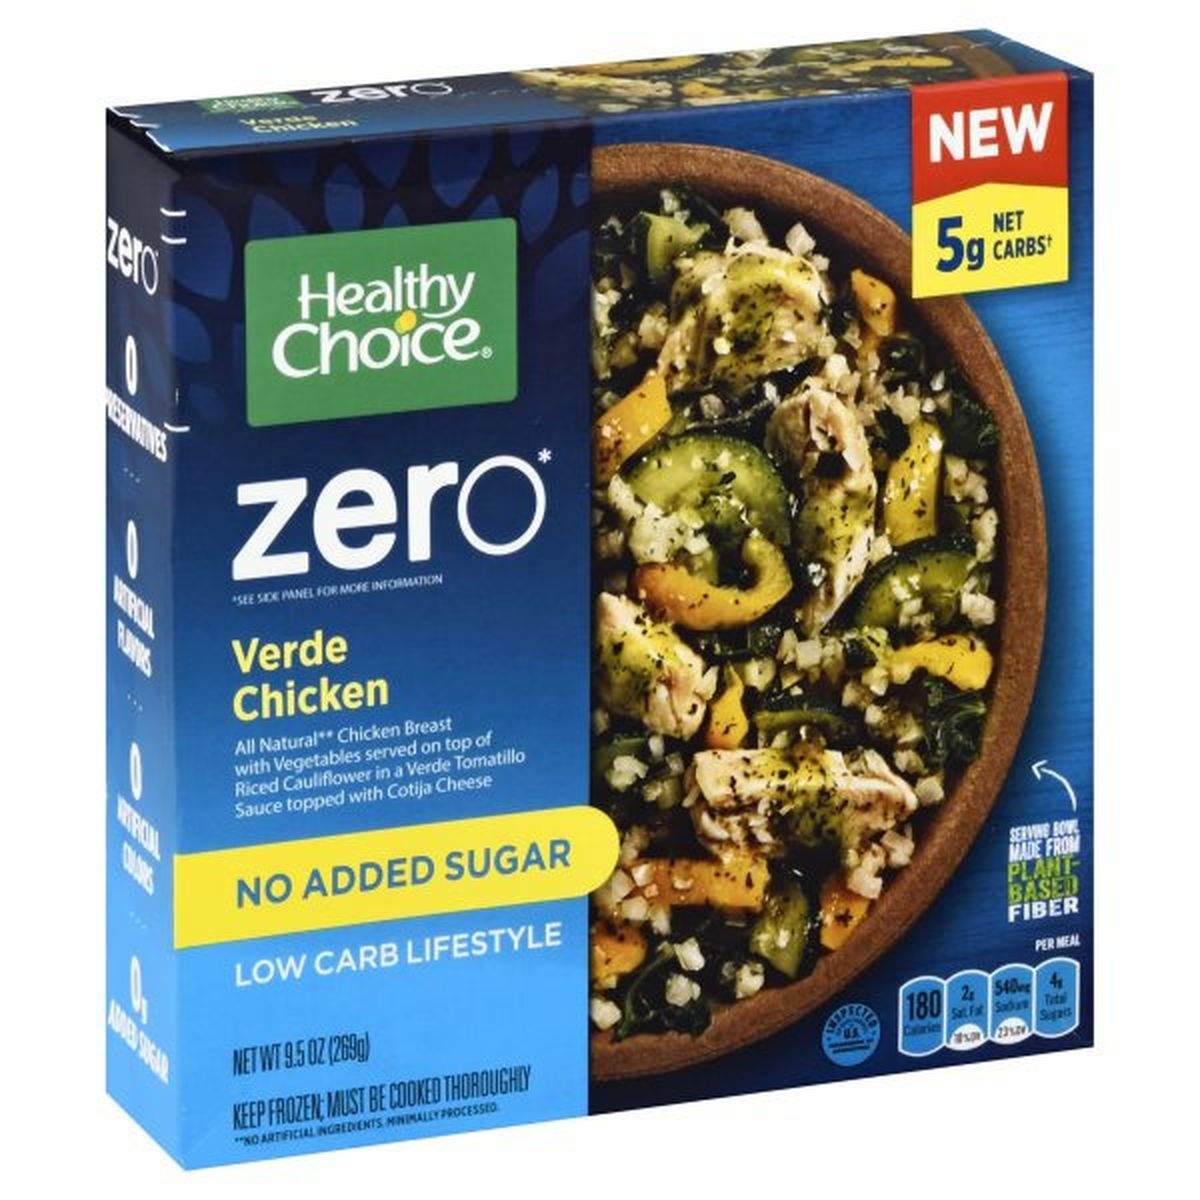 Calories in Healthy Choice Zero Verde Chicken, No Added Sugar